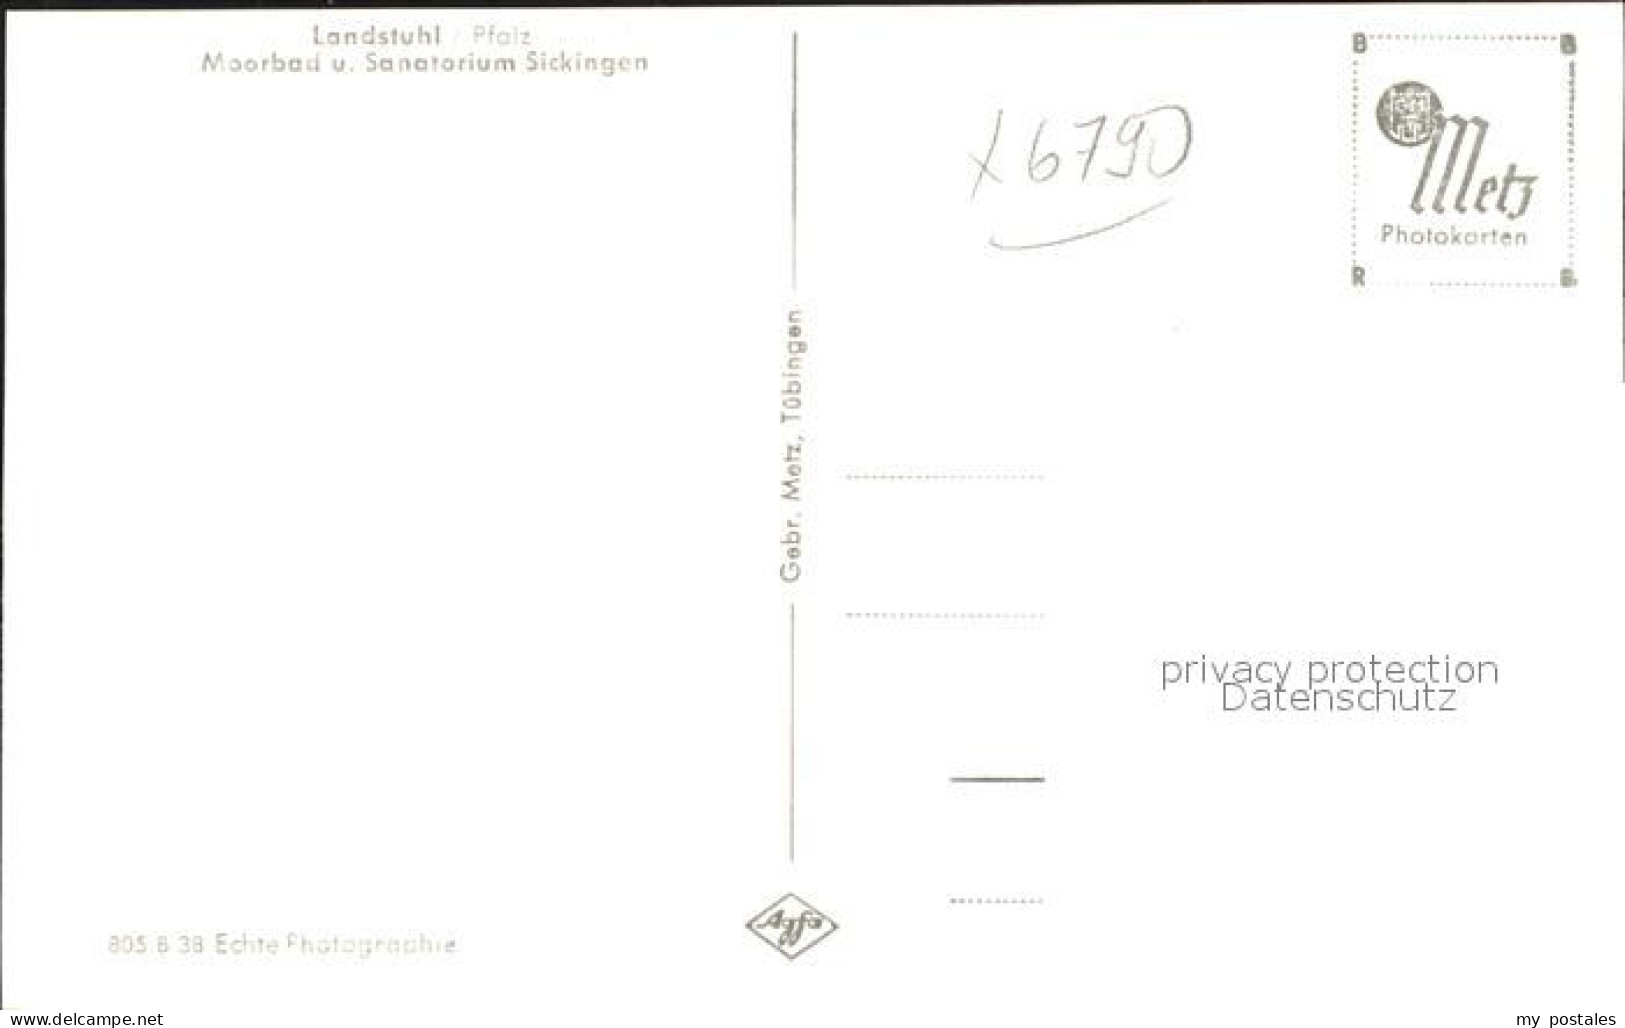 41792869 Landstuhl Moorbau Sanatorium Sickingen Landstuhl - Landstuhl